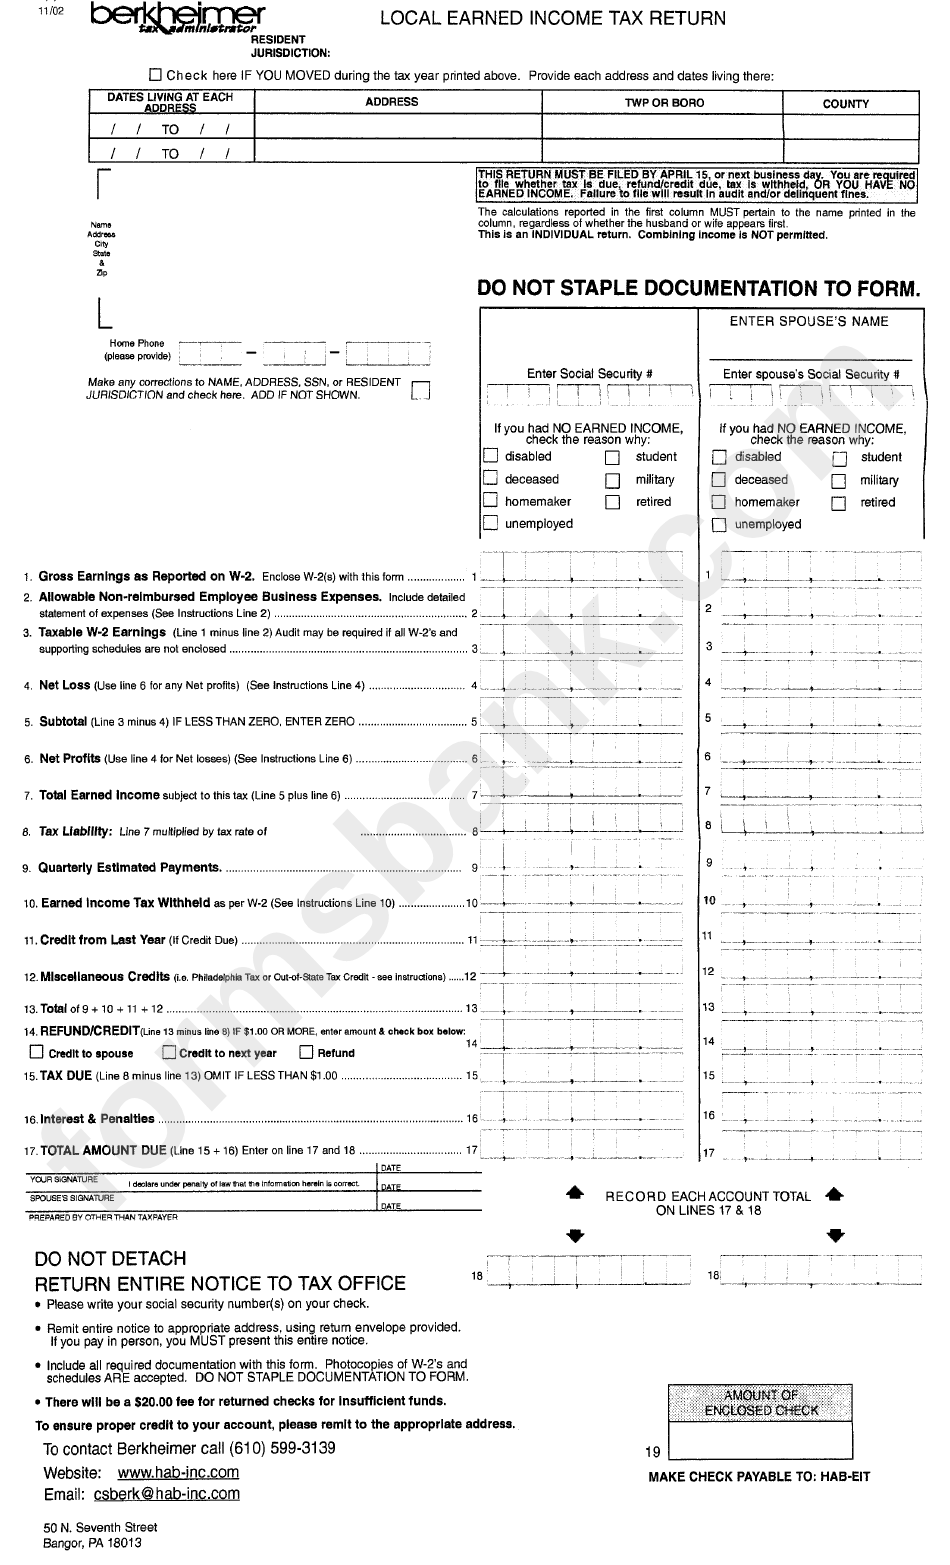 Local Earned Income Tax Return Form - Berkheimer Tax Administrator